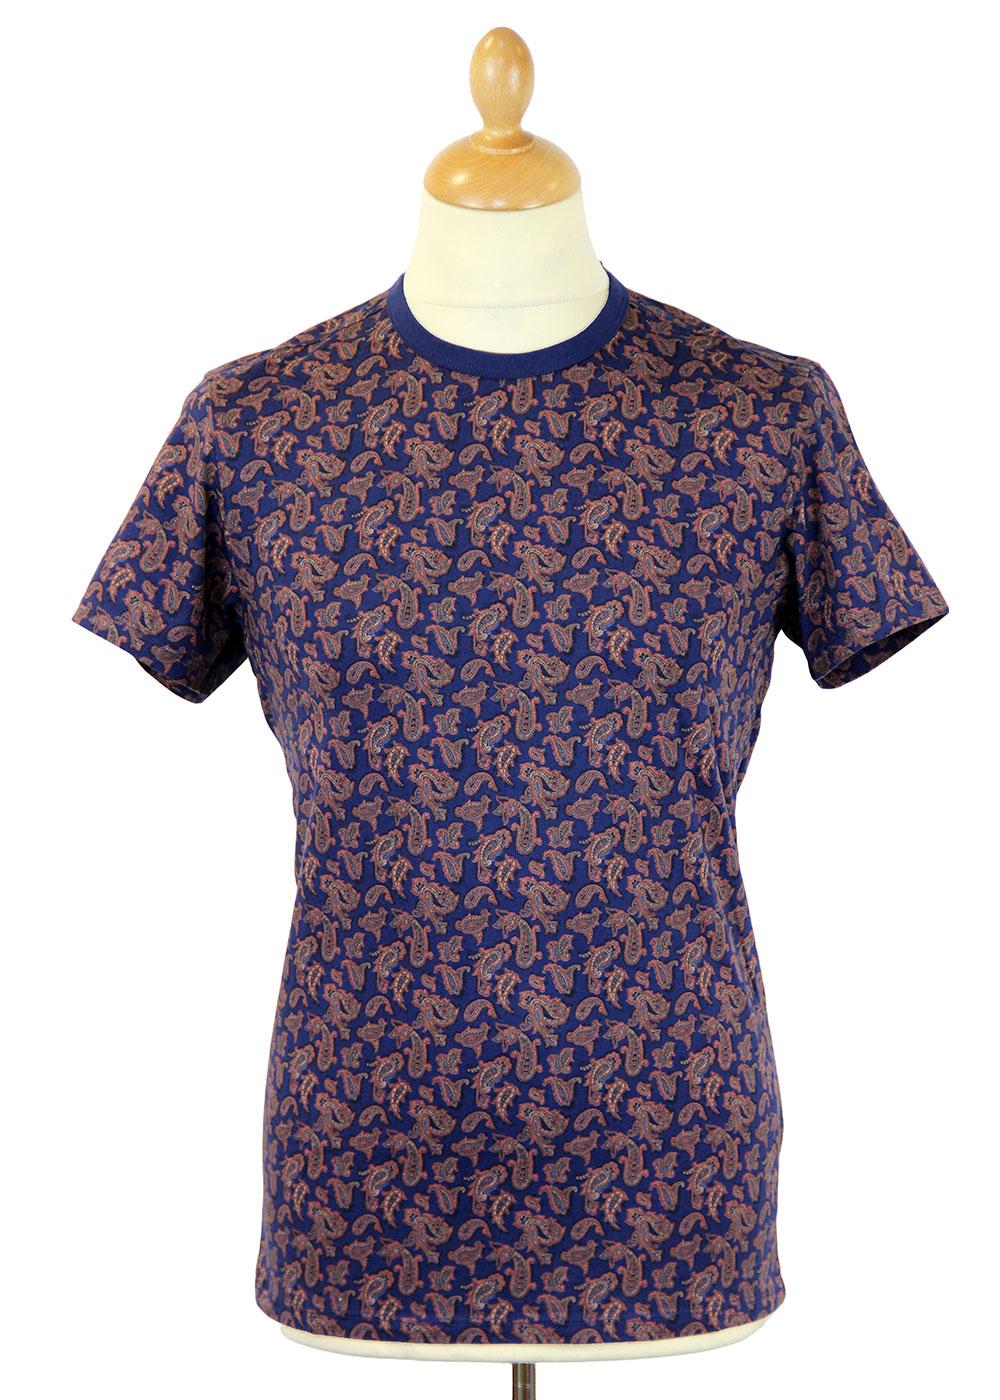 BEN SHERMAN Retro 60s Mod Paisley T-Shirt (MB)